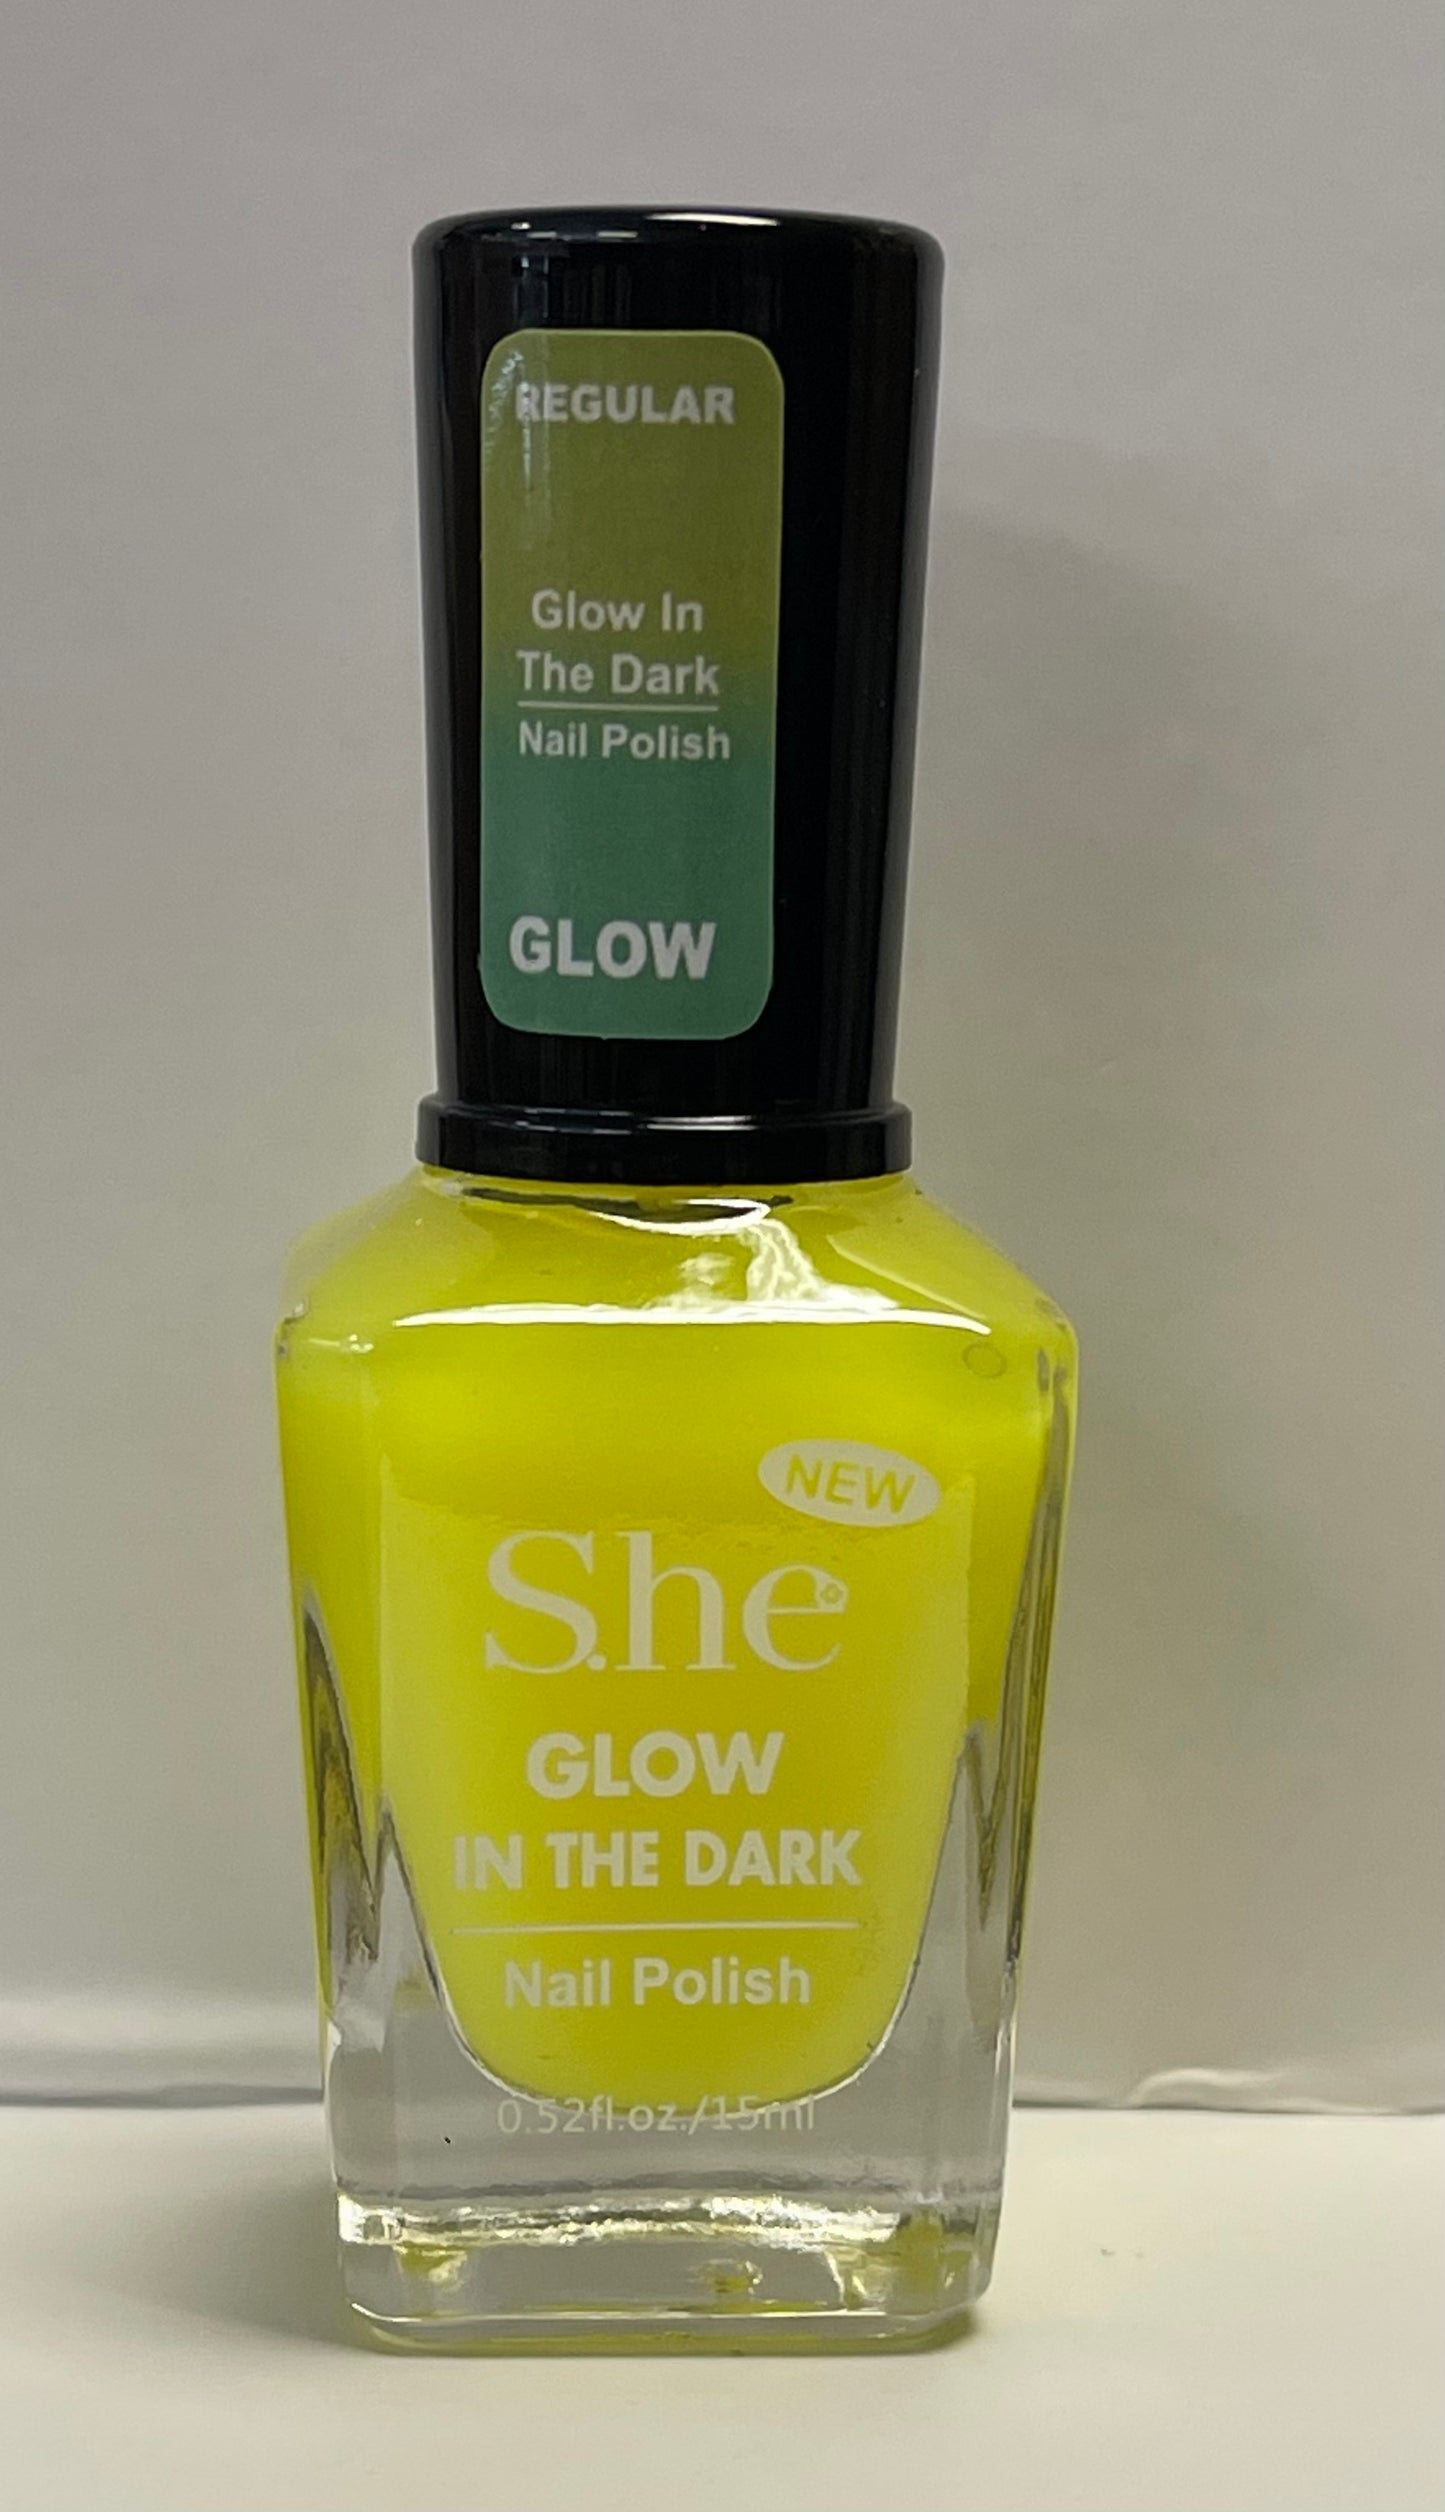 Glow in the dar nail polish (yellow) - Tam's Natural Solutions